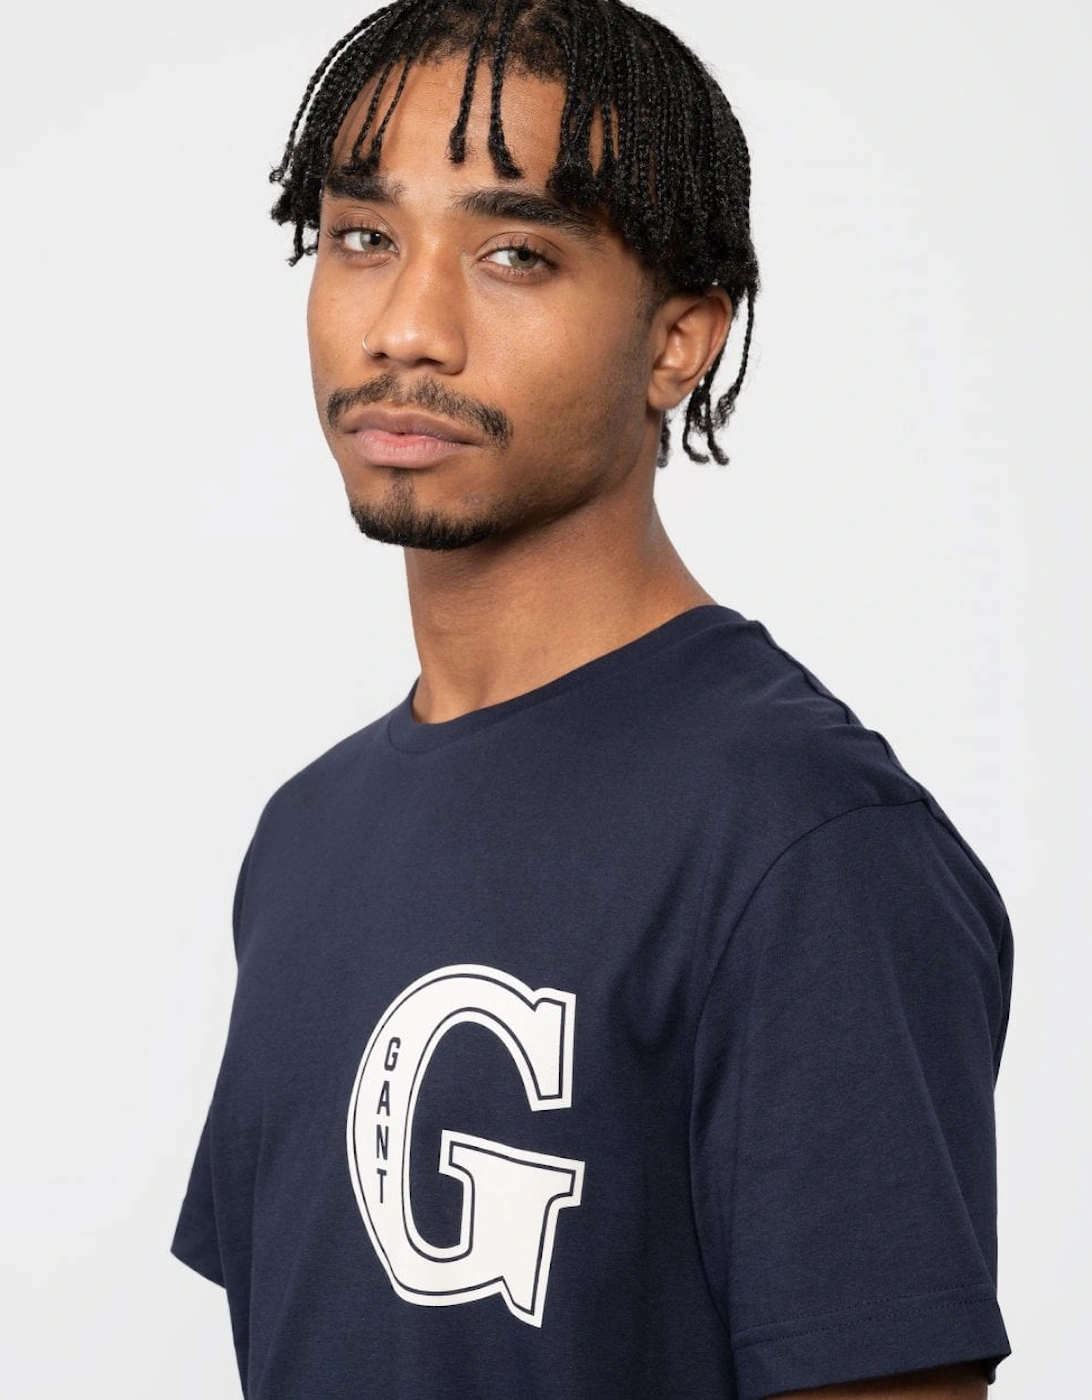 Mens G Graphic T-Shirt